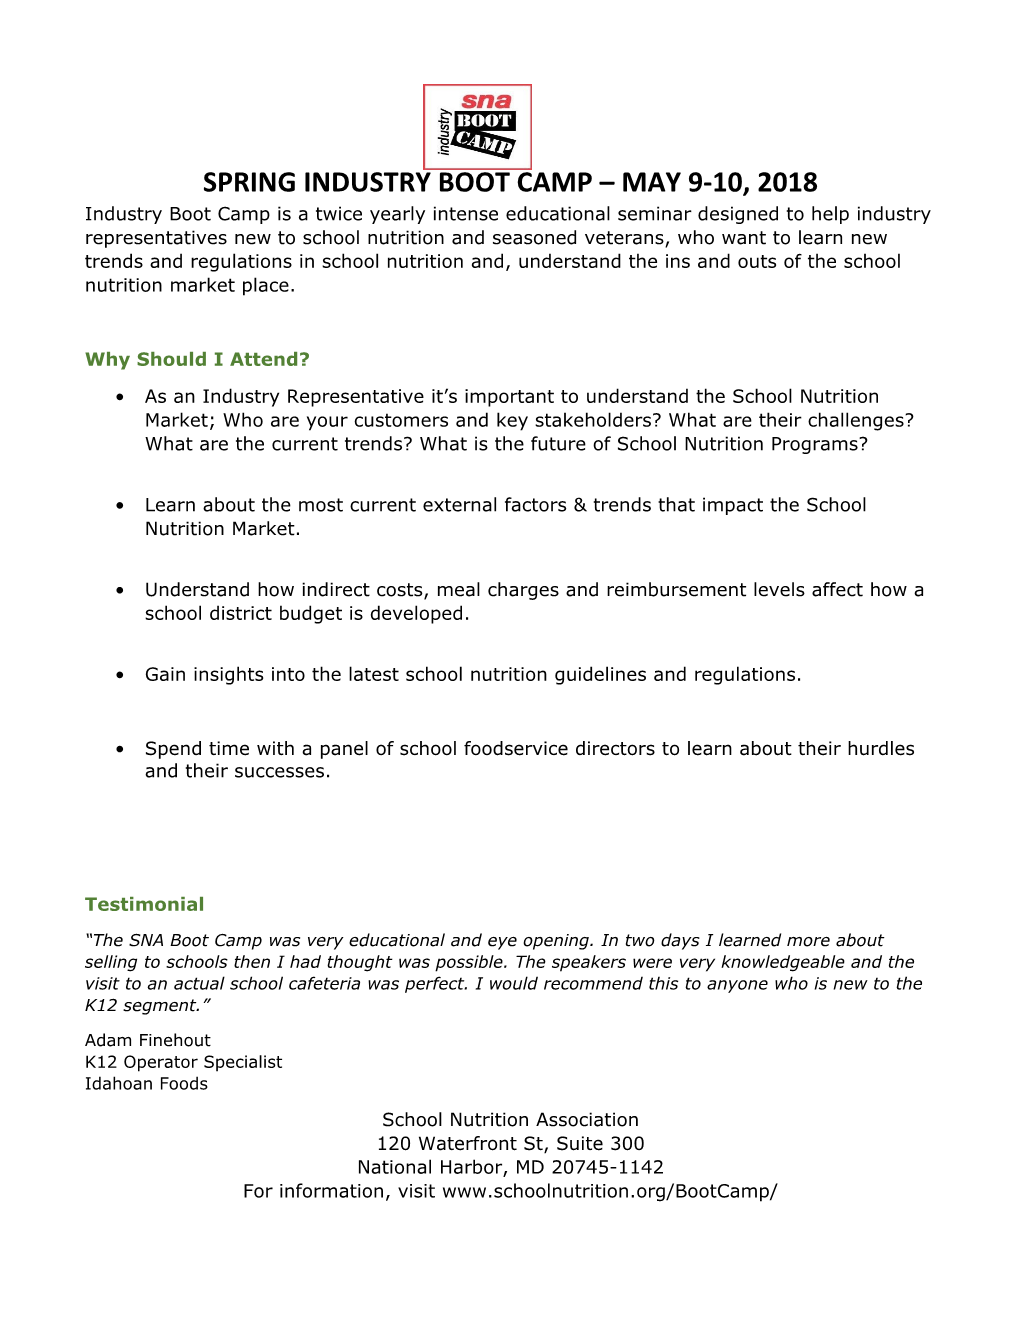 Springindustry Boot Camp May 9-10, 2018